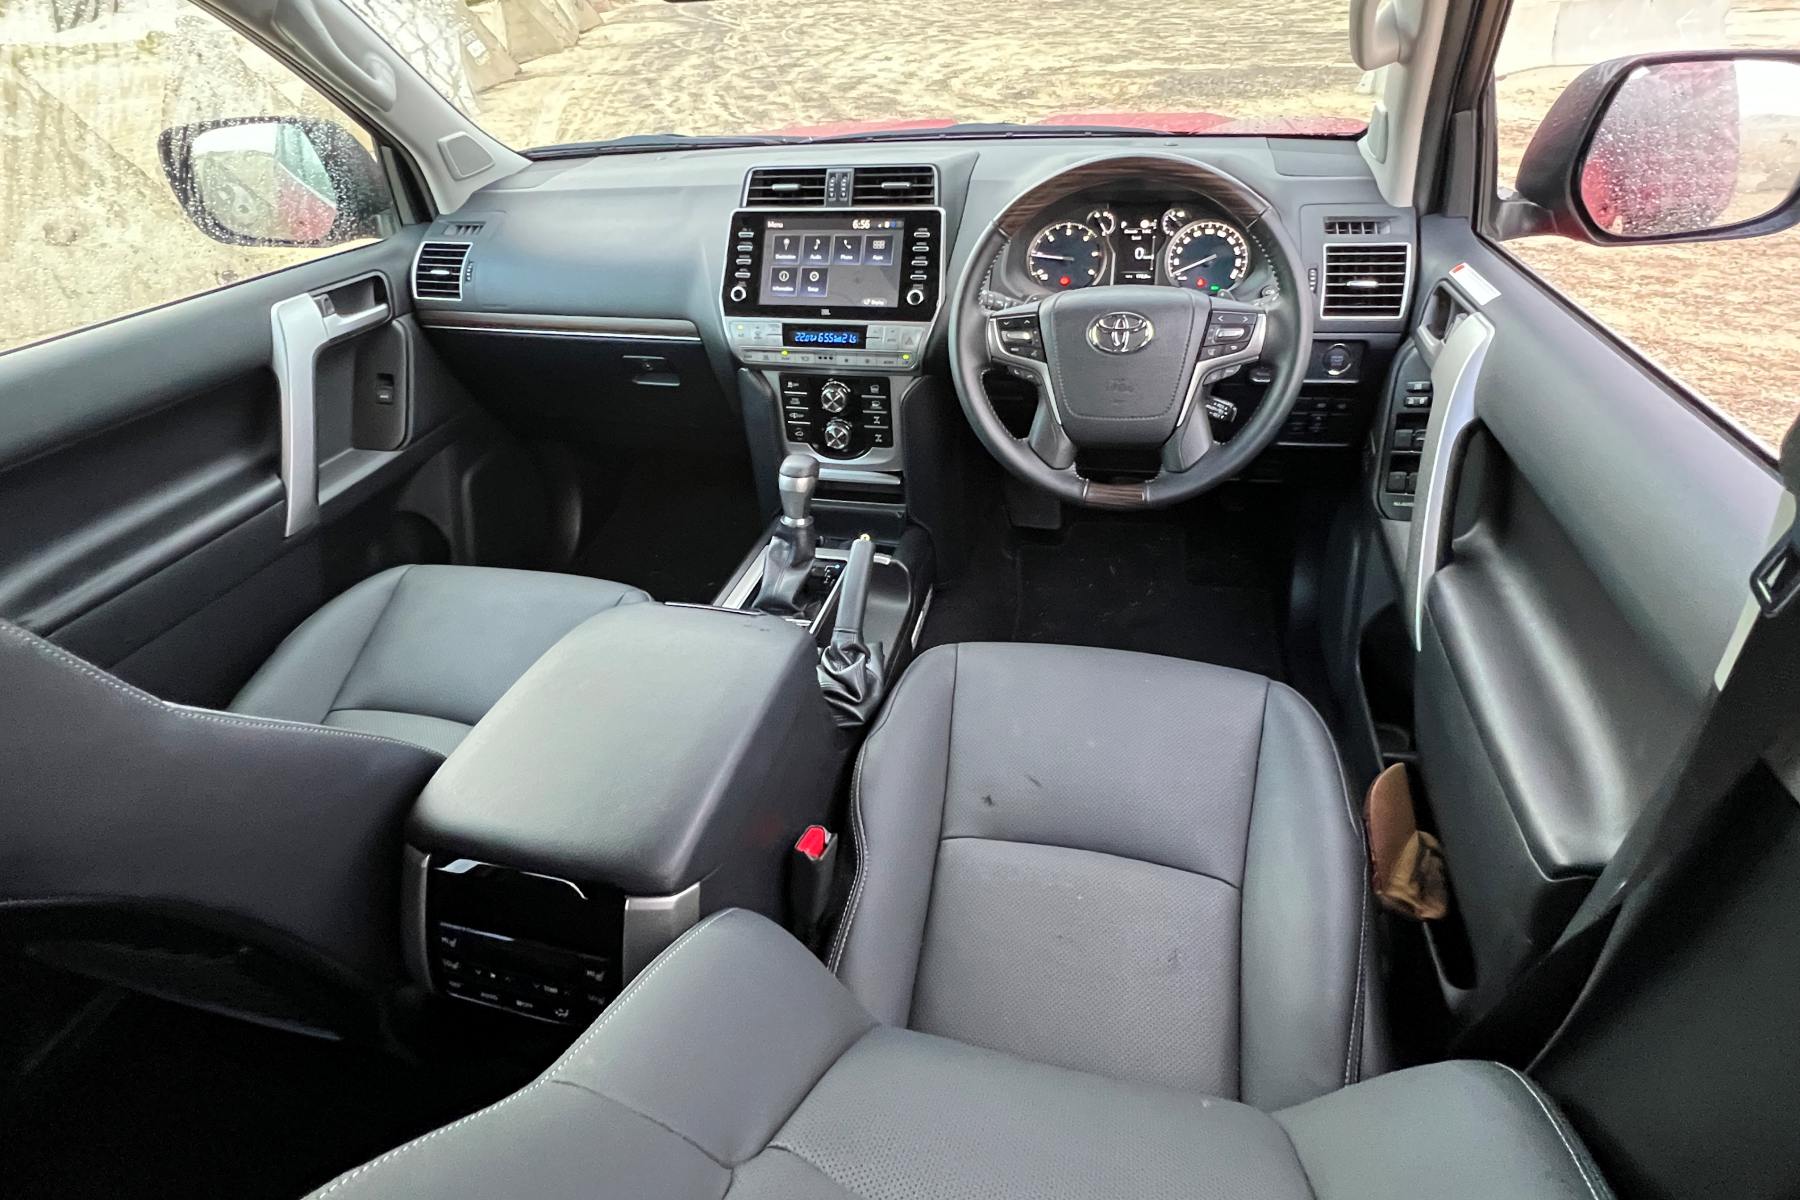 Toyota LandCruiser Prado Kakadu 4WD front interior